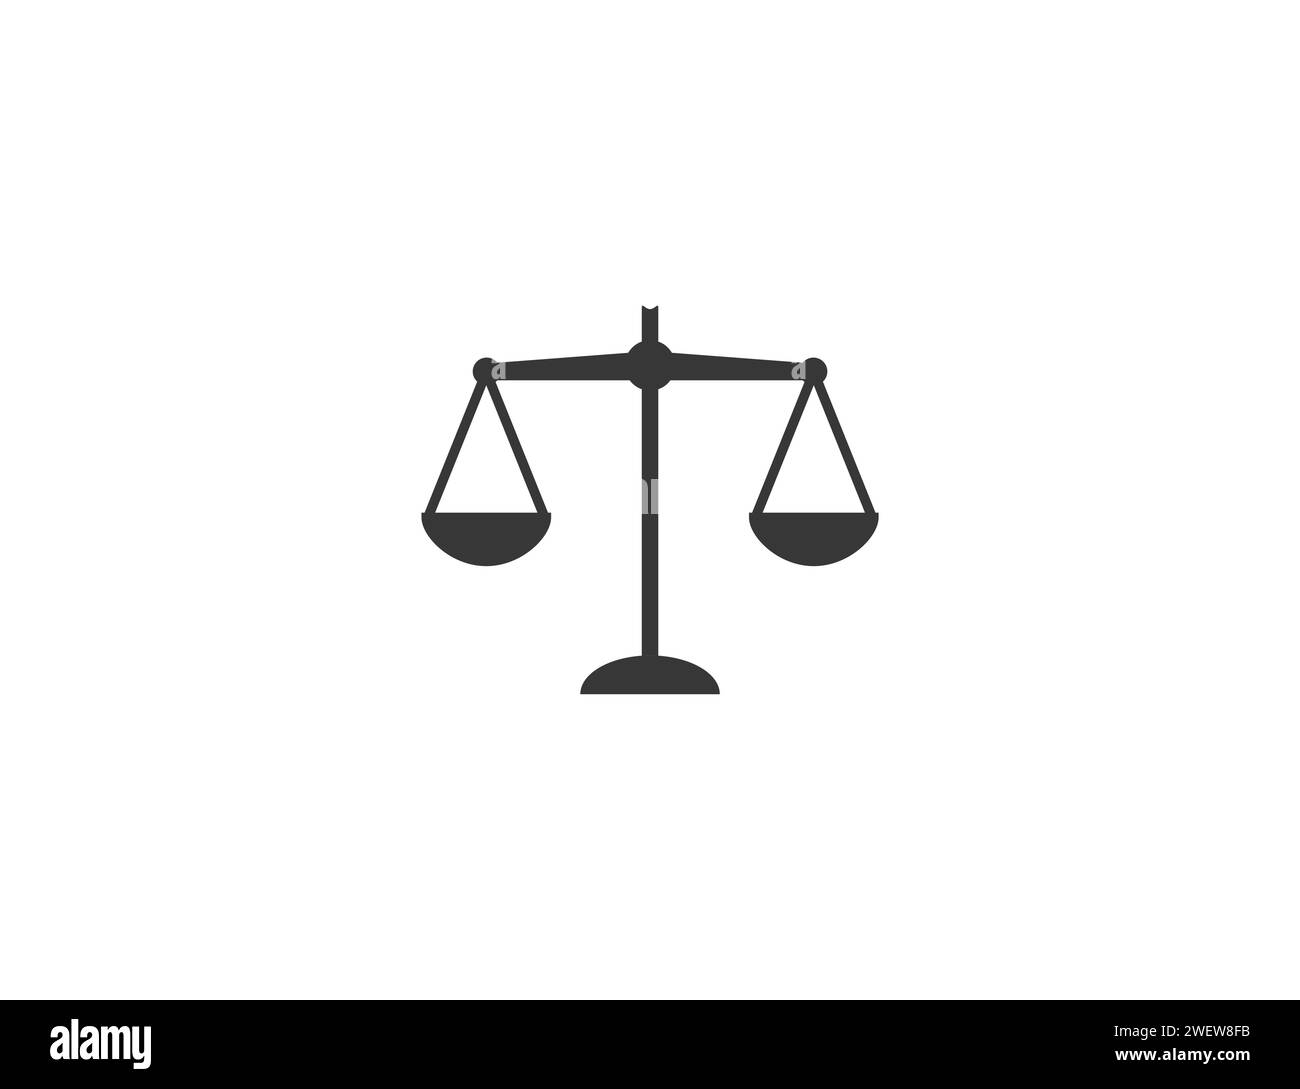 Stability, balance, harmony icon. Vector illustration. Stock Vector